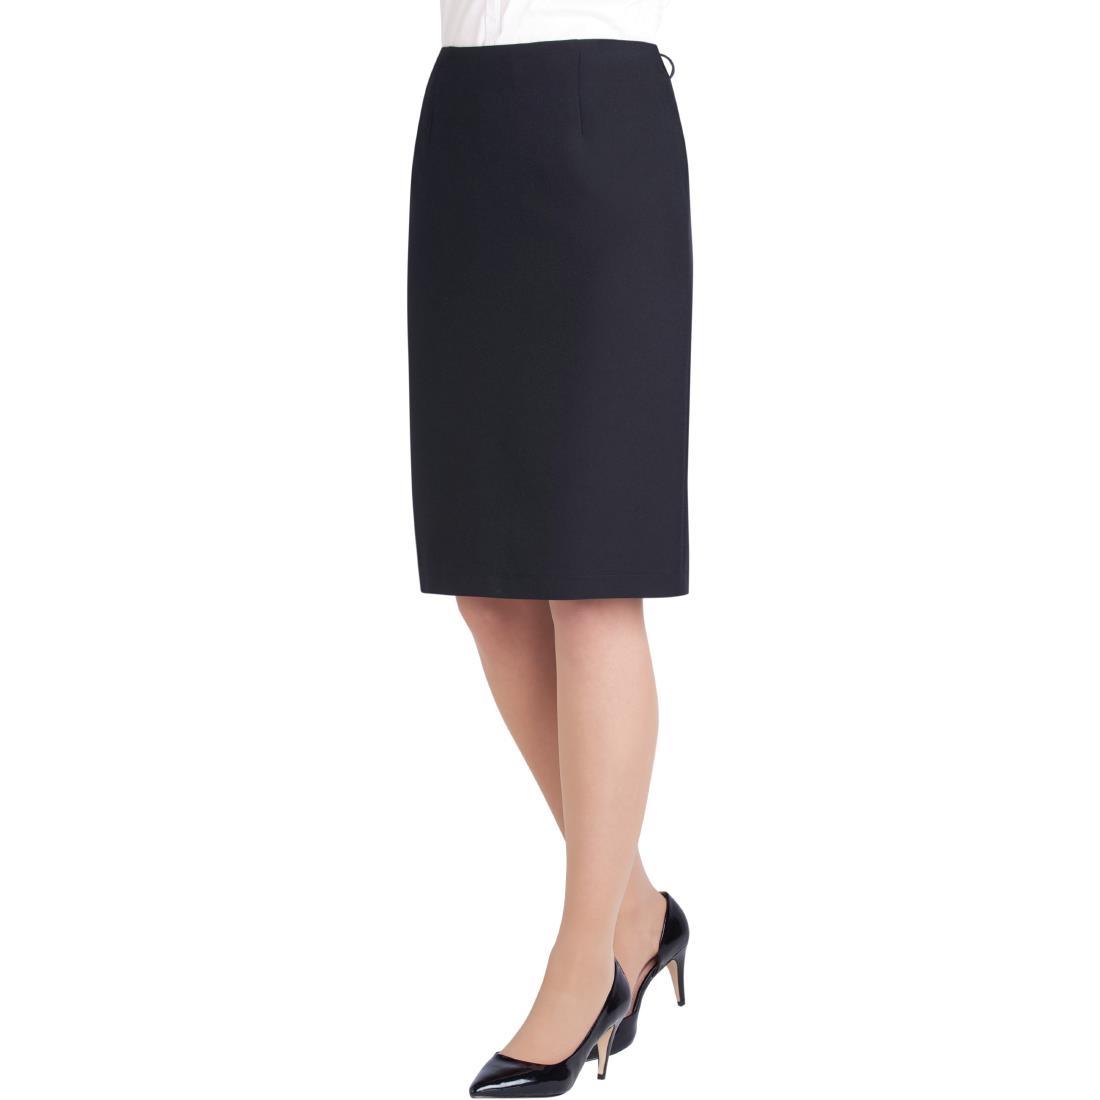 Events Ladies Black Skirt Size 10 - BB174-10  - 1